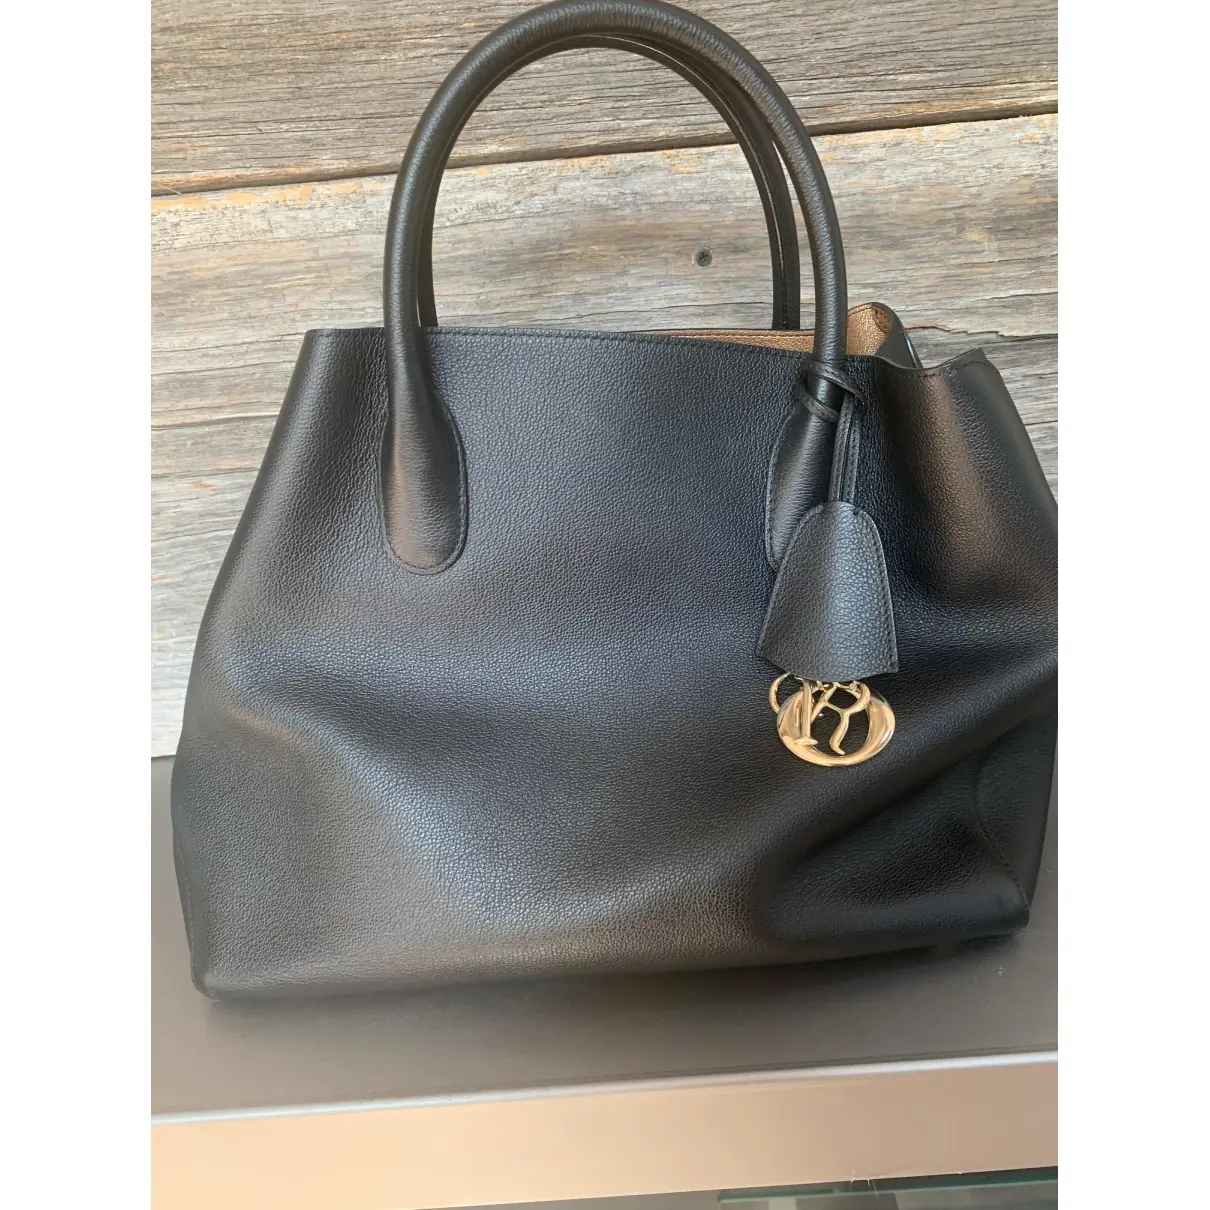 Buy Dior Open Bar leather handbag online